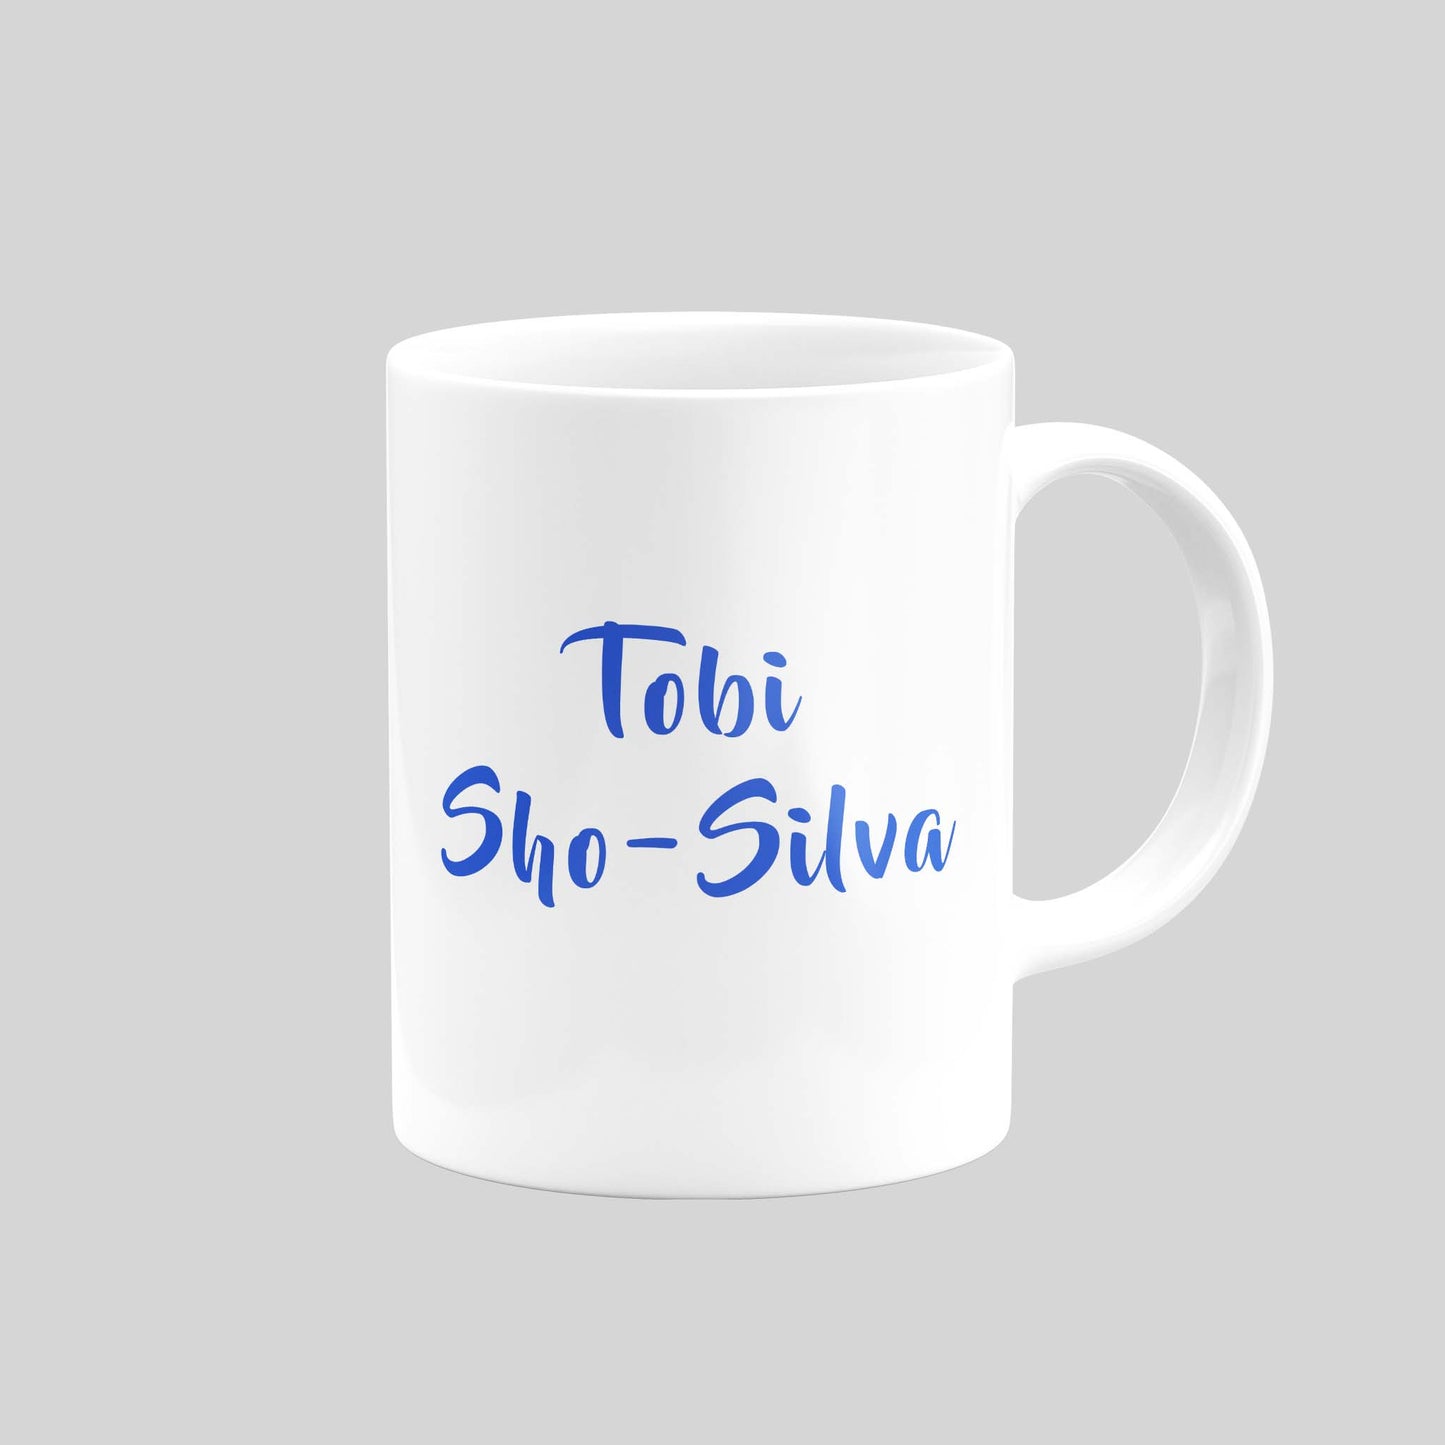 Tobi Sho-Silva Mug